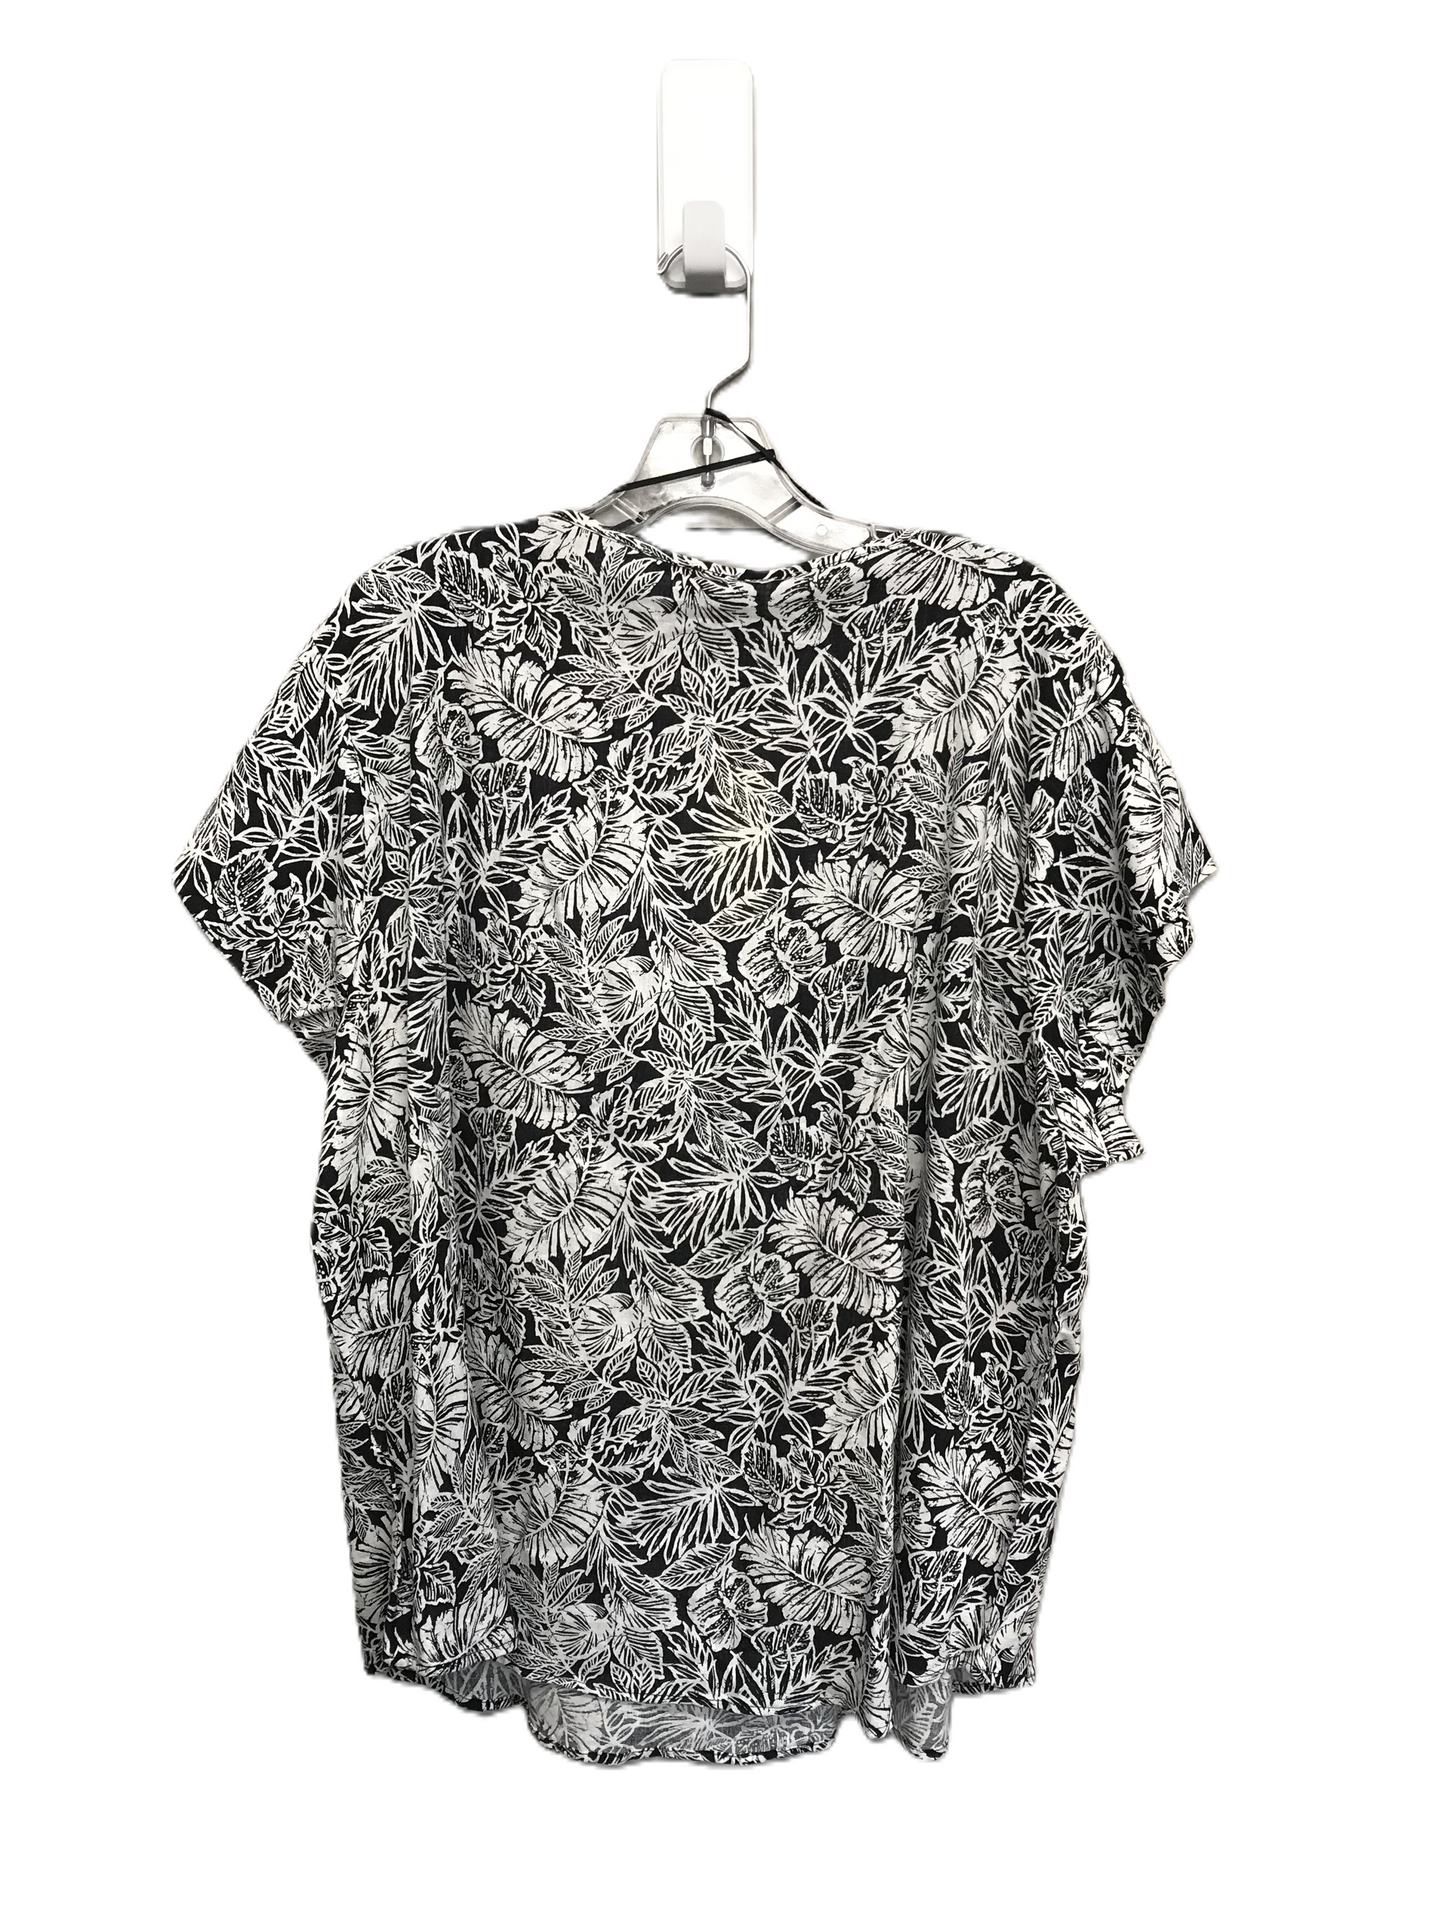 Black & White Top Short Sleeve By Jones New York, Size: 2x